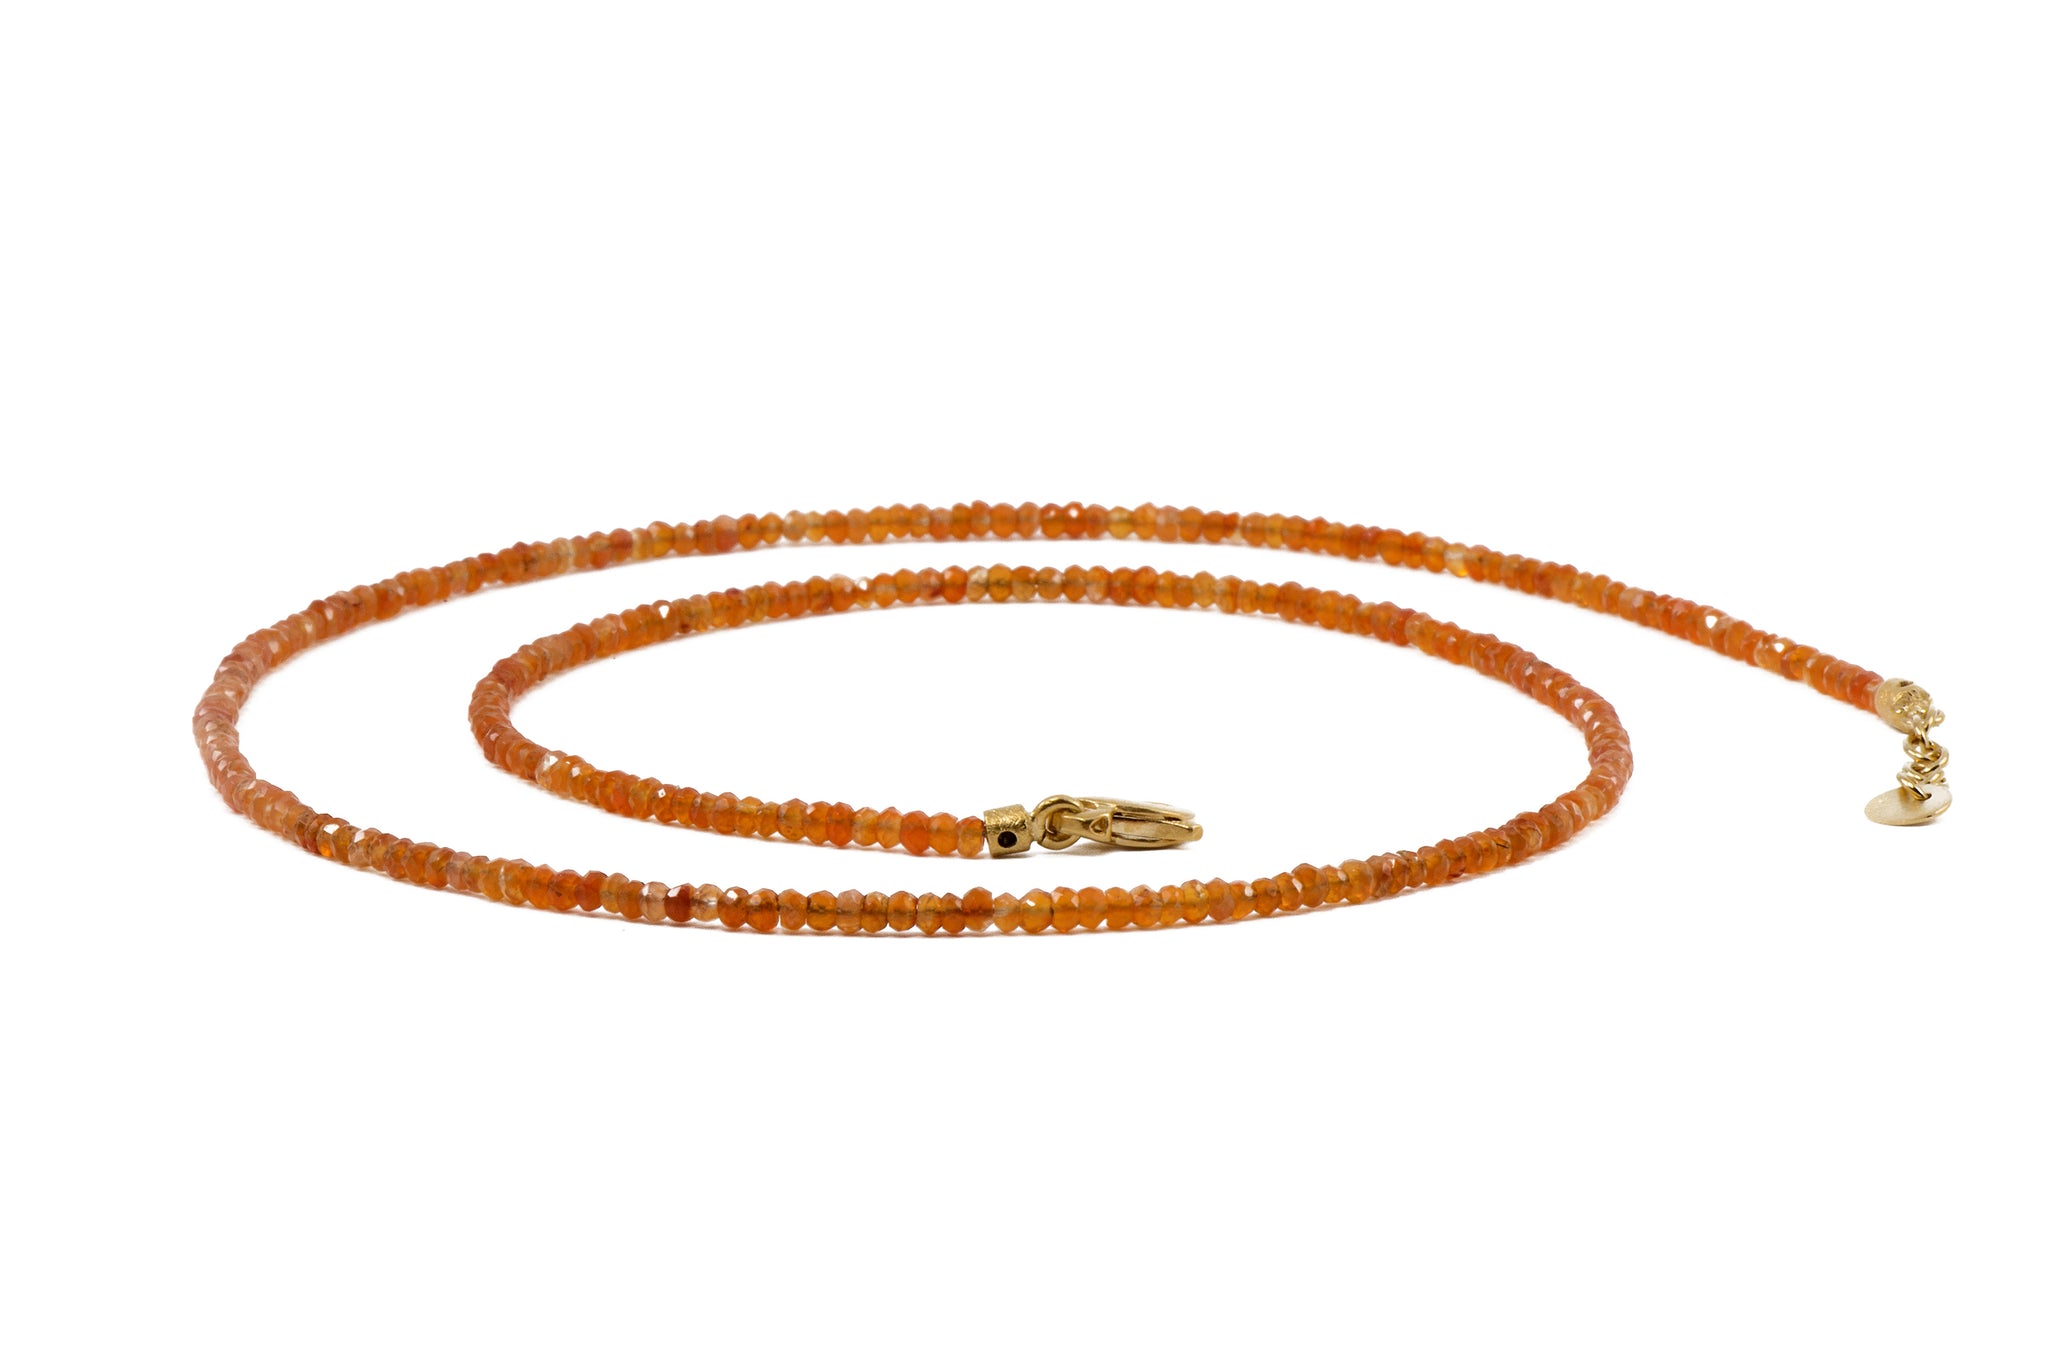 Carnelian Wrap Bracelet Or Necklace 3MM 24K Fair Trade Gold Vermeil